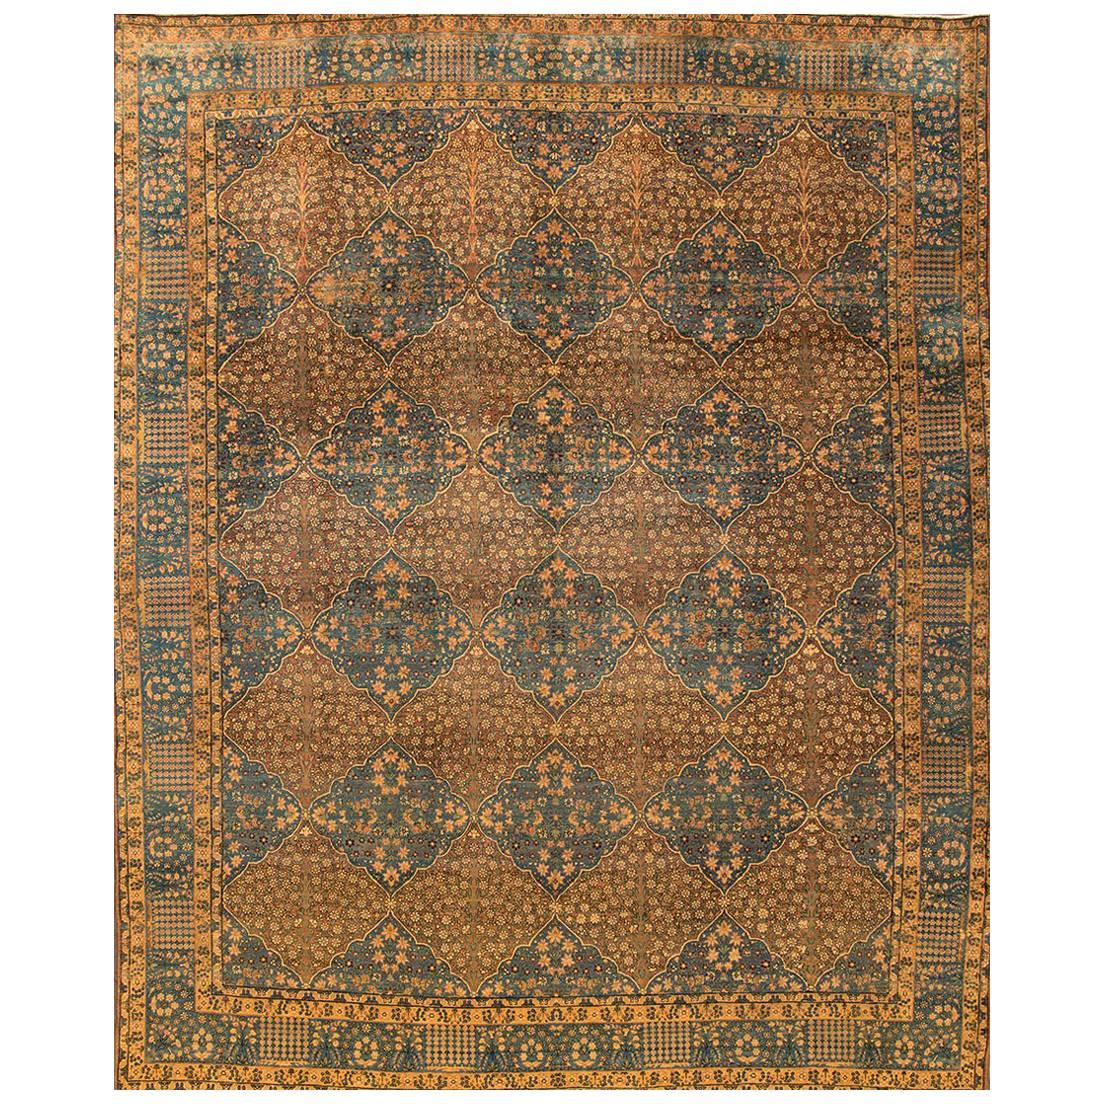 Antique Beige and Blue Persian Kerman Carpet For Sale